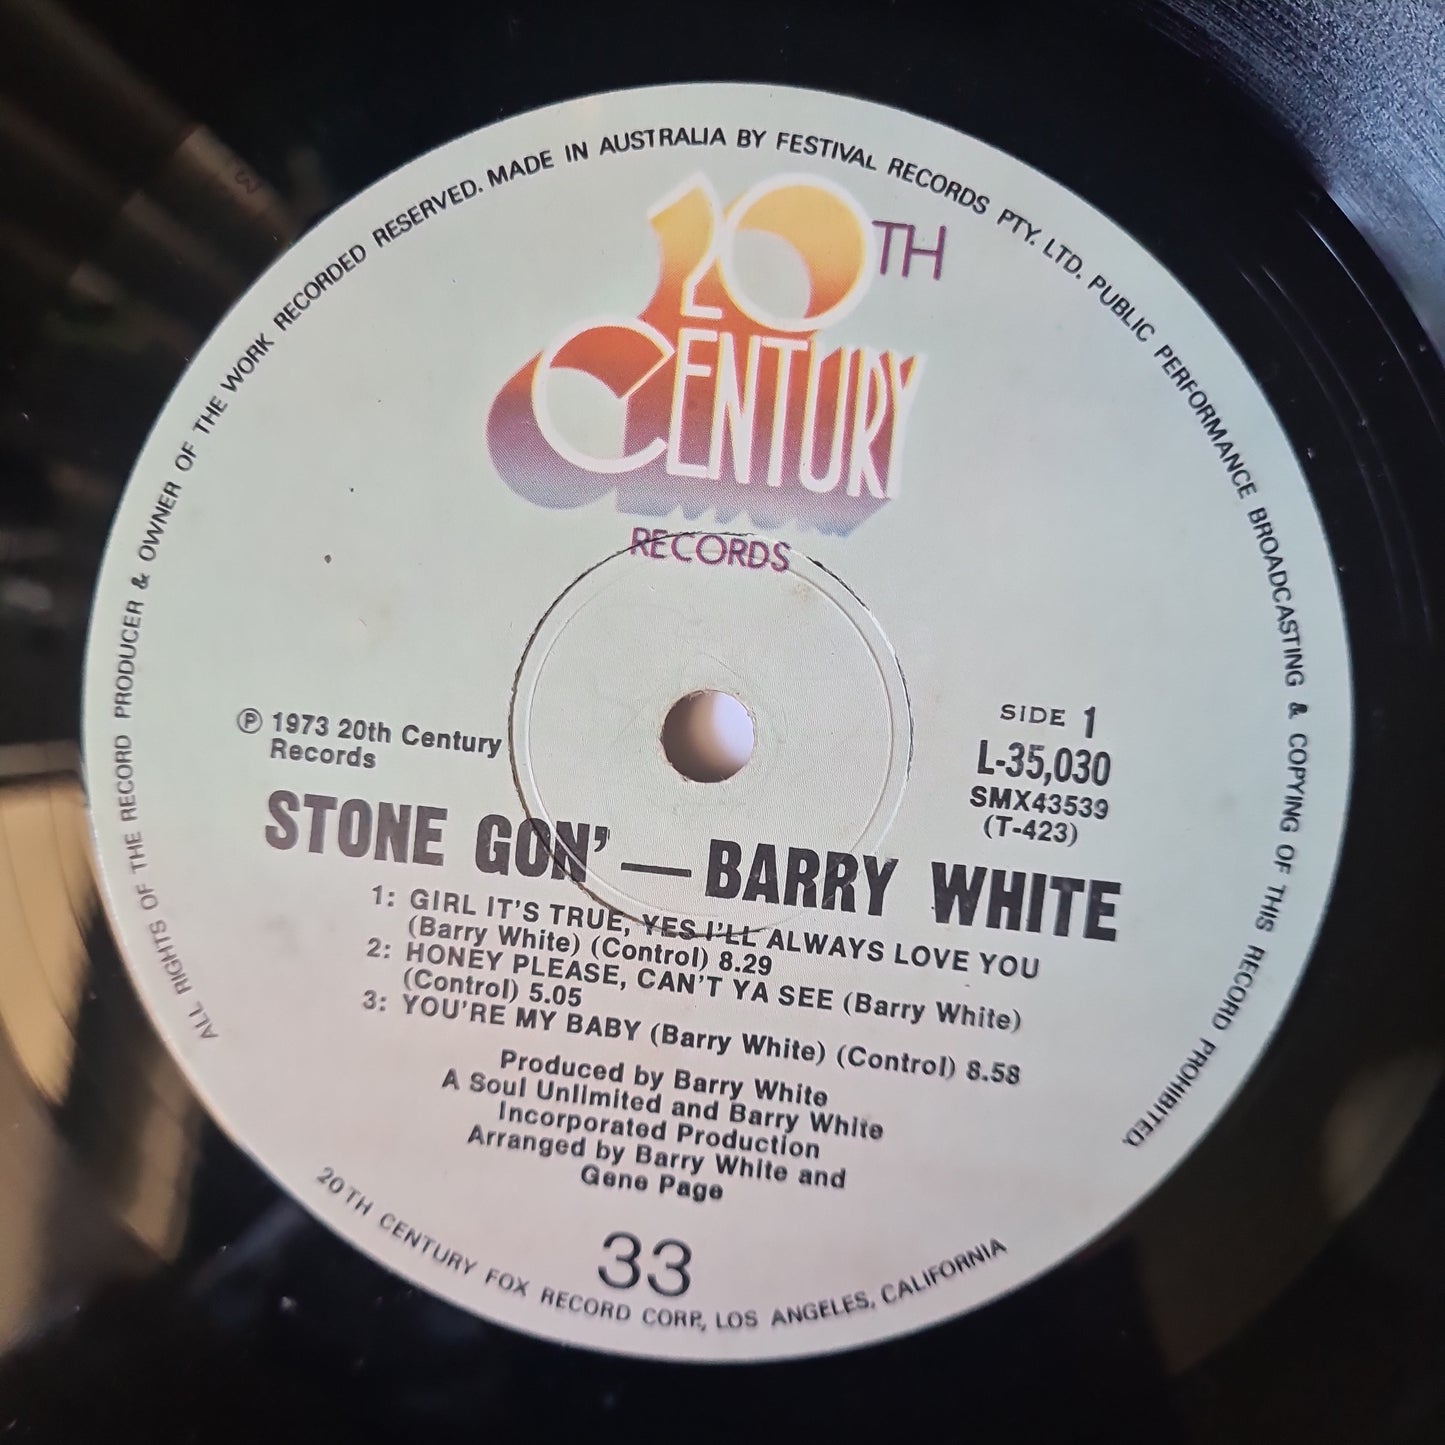 Barry White – Stone Gon' - 1974 - Vinyl Record